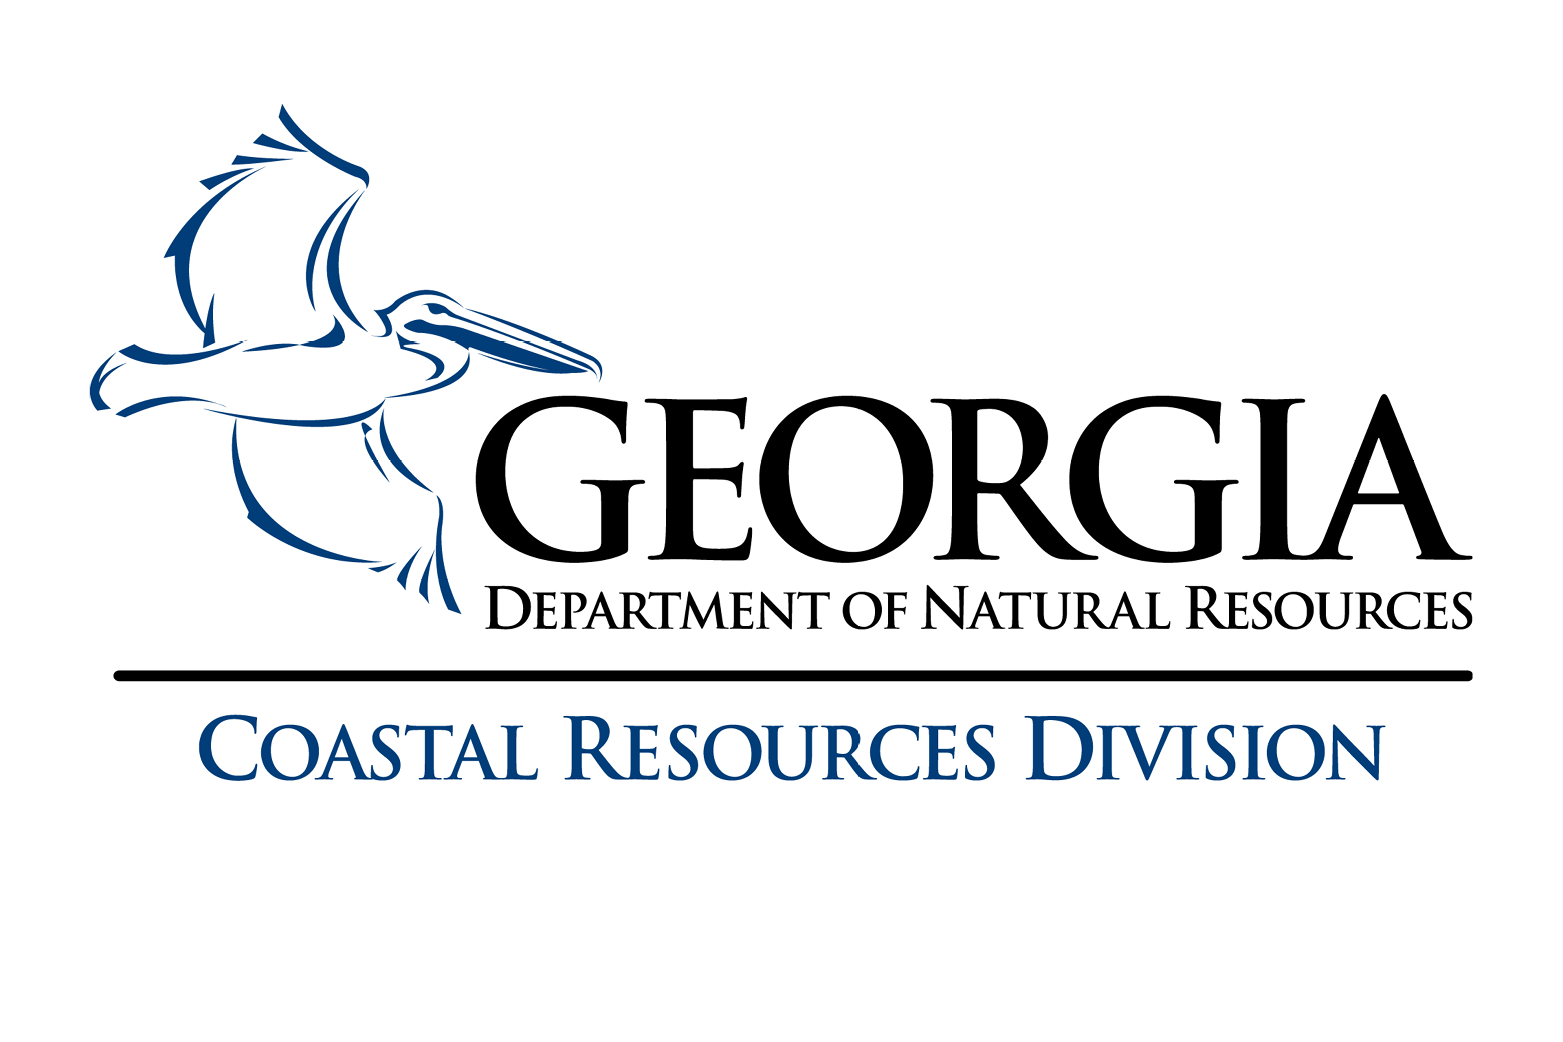 Georgia Department of Natural Resources - Coastal Resources Division